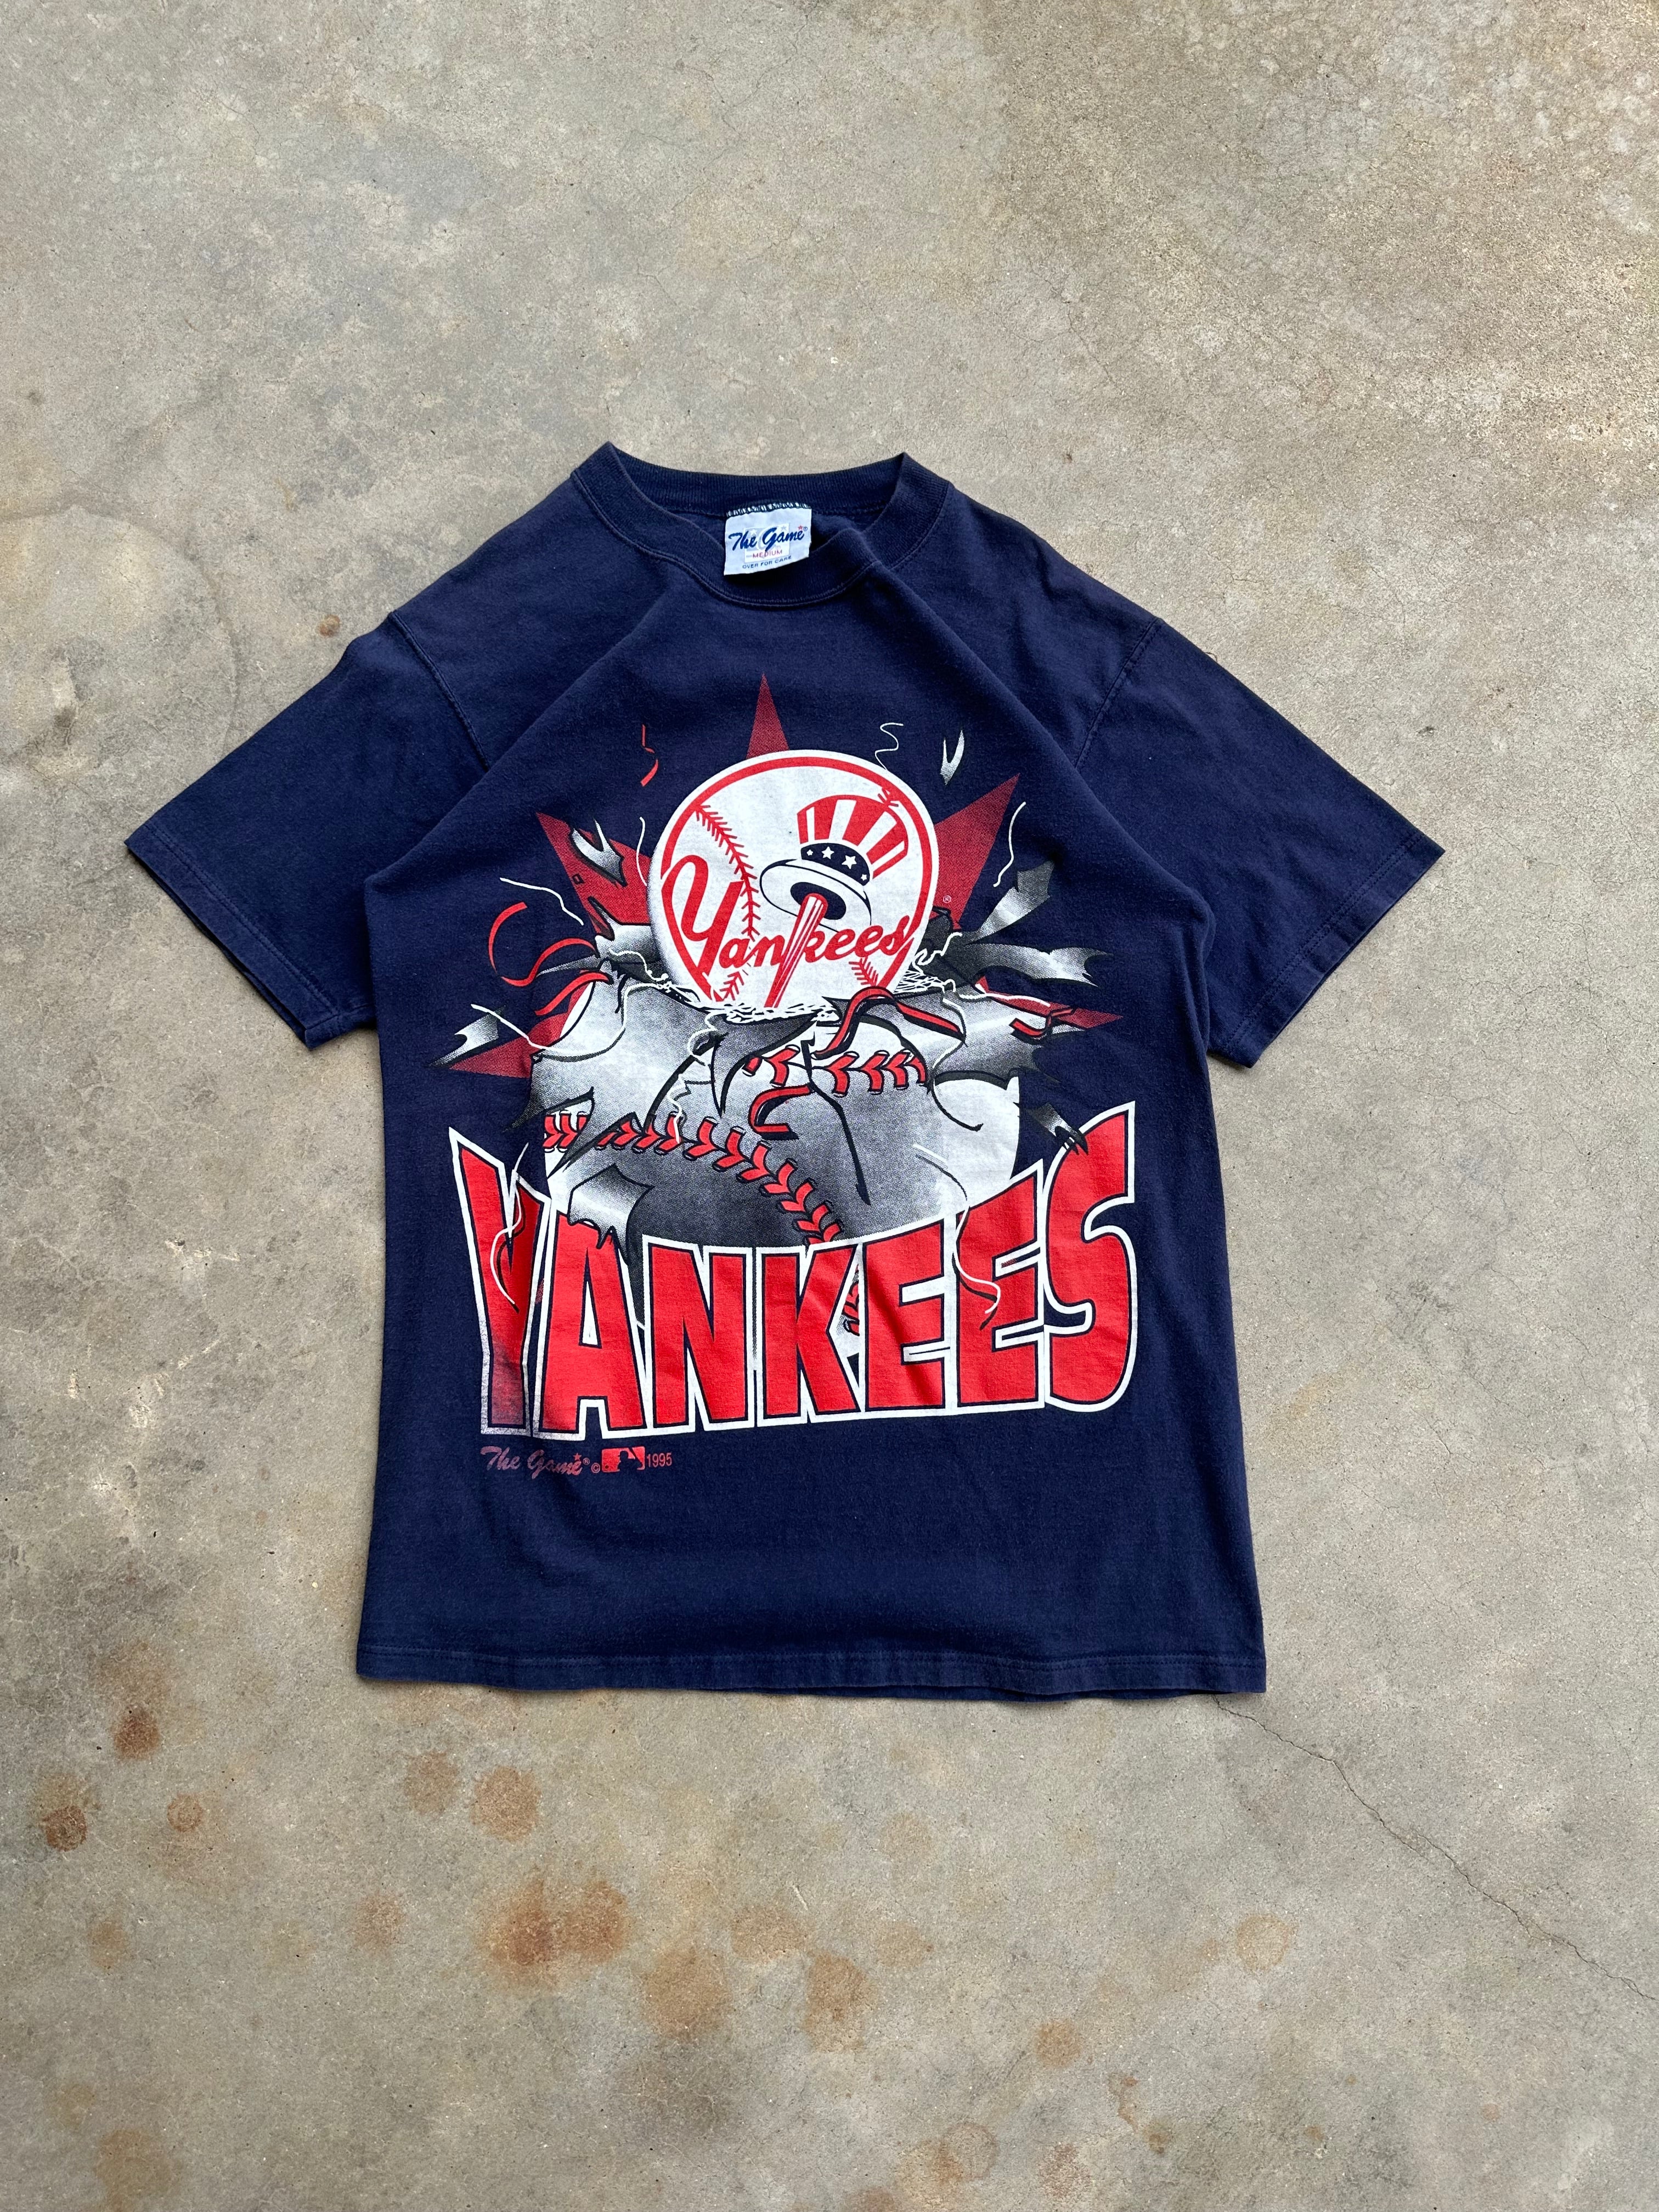 1995 New York Yankees T-Shirt (S/M)